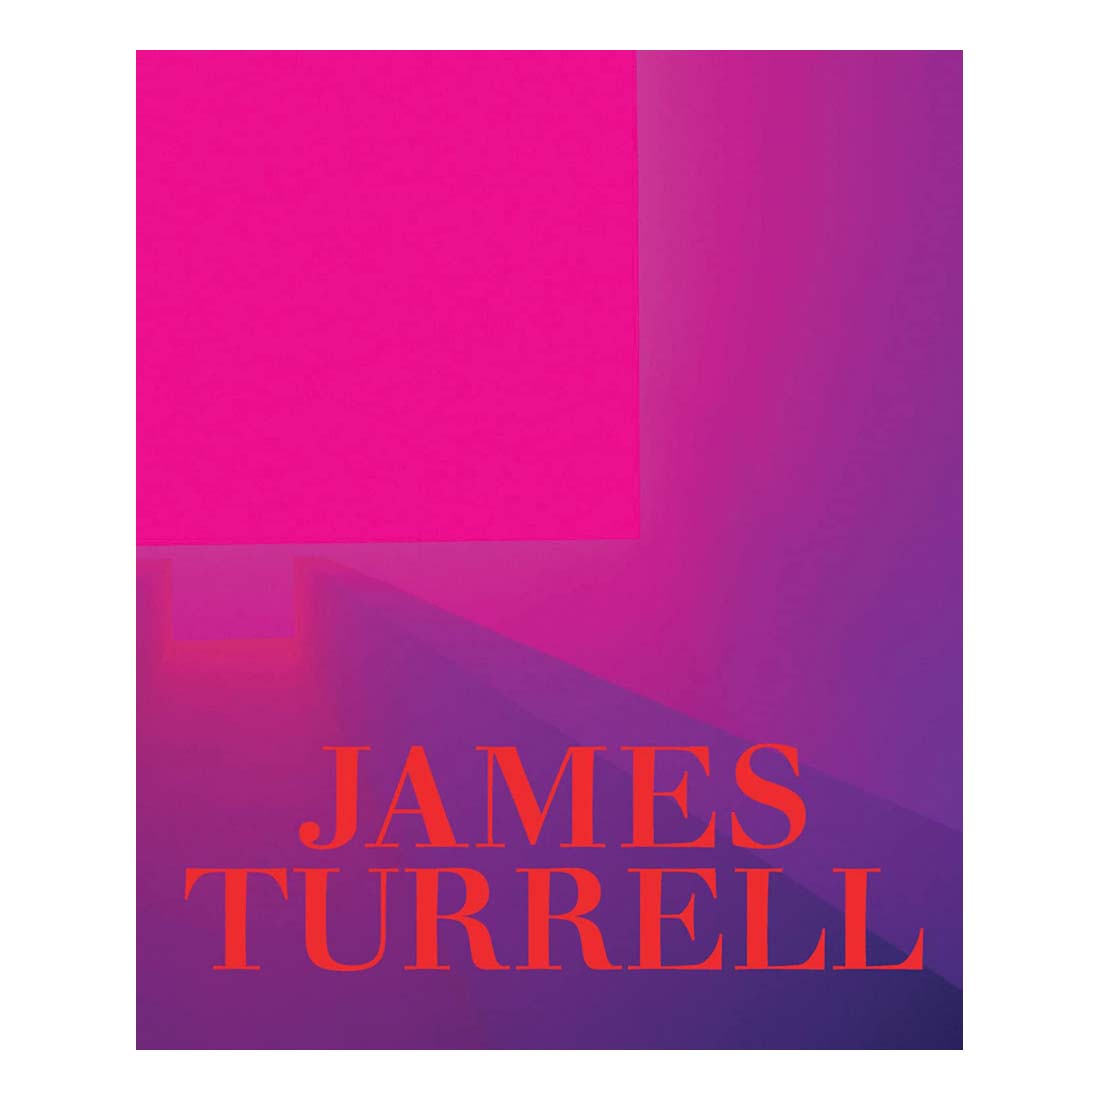 James Turrell: A Retrospective